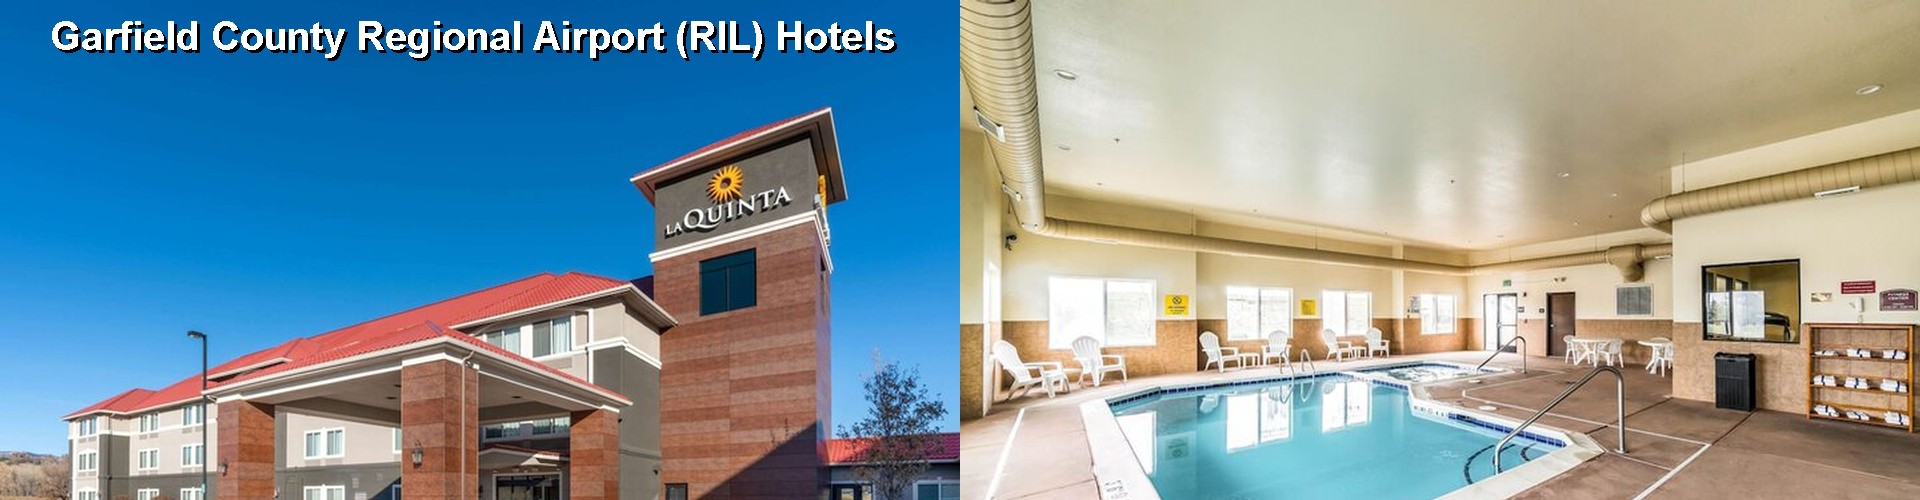 5 Best Hotels near Garfield County Regional Airport (RIL)